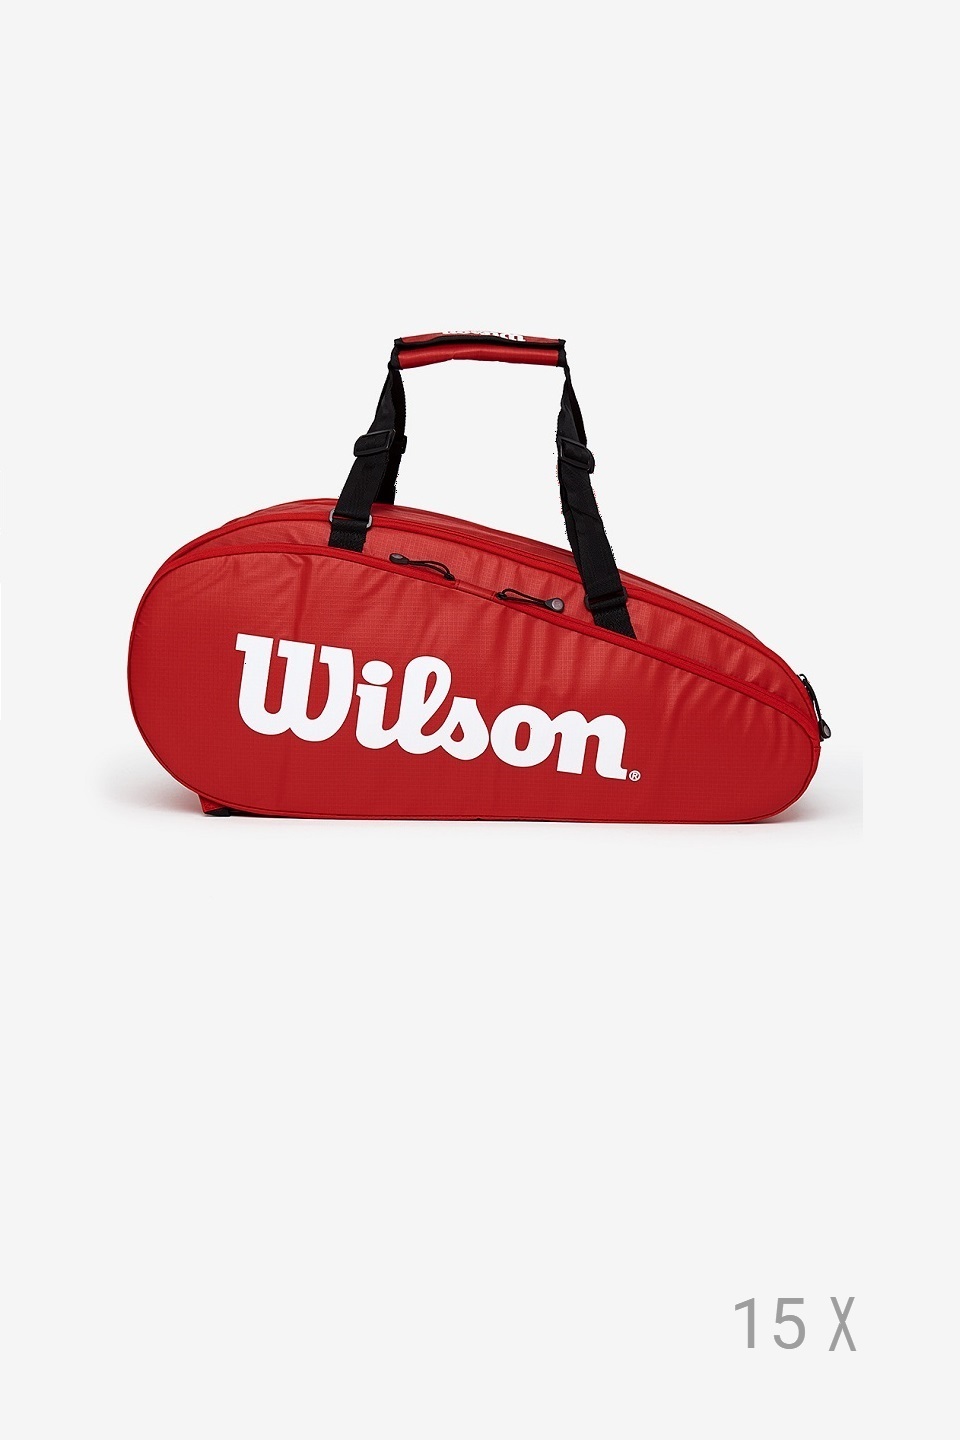 WİLSON - Wilson Tour 3 Comp Red 15X Tenis Çantası